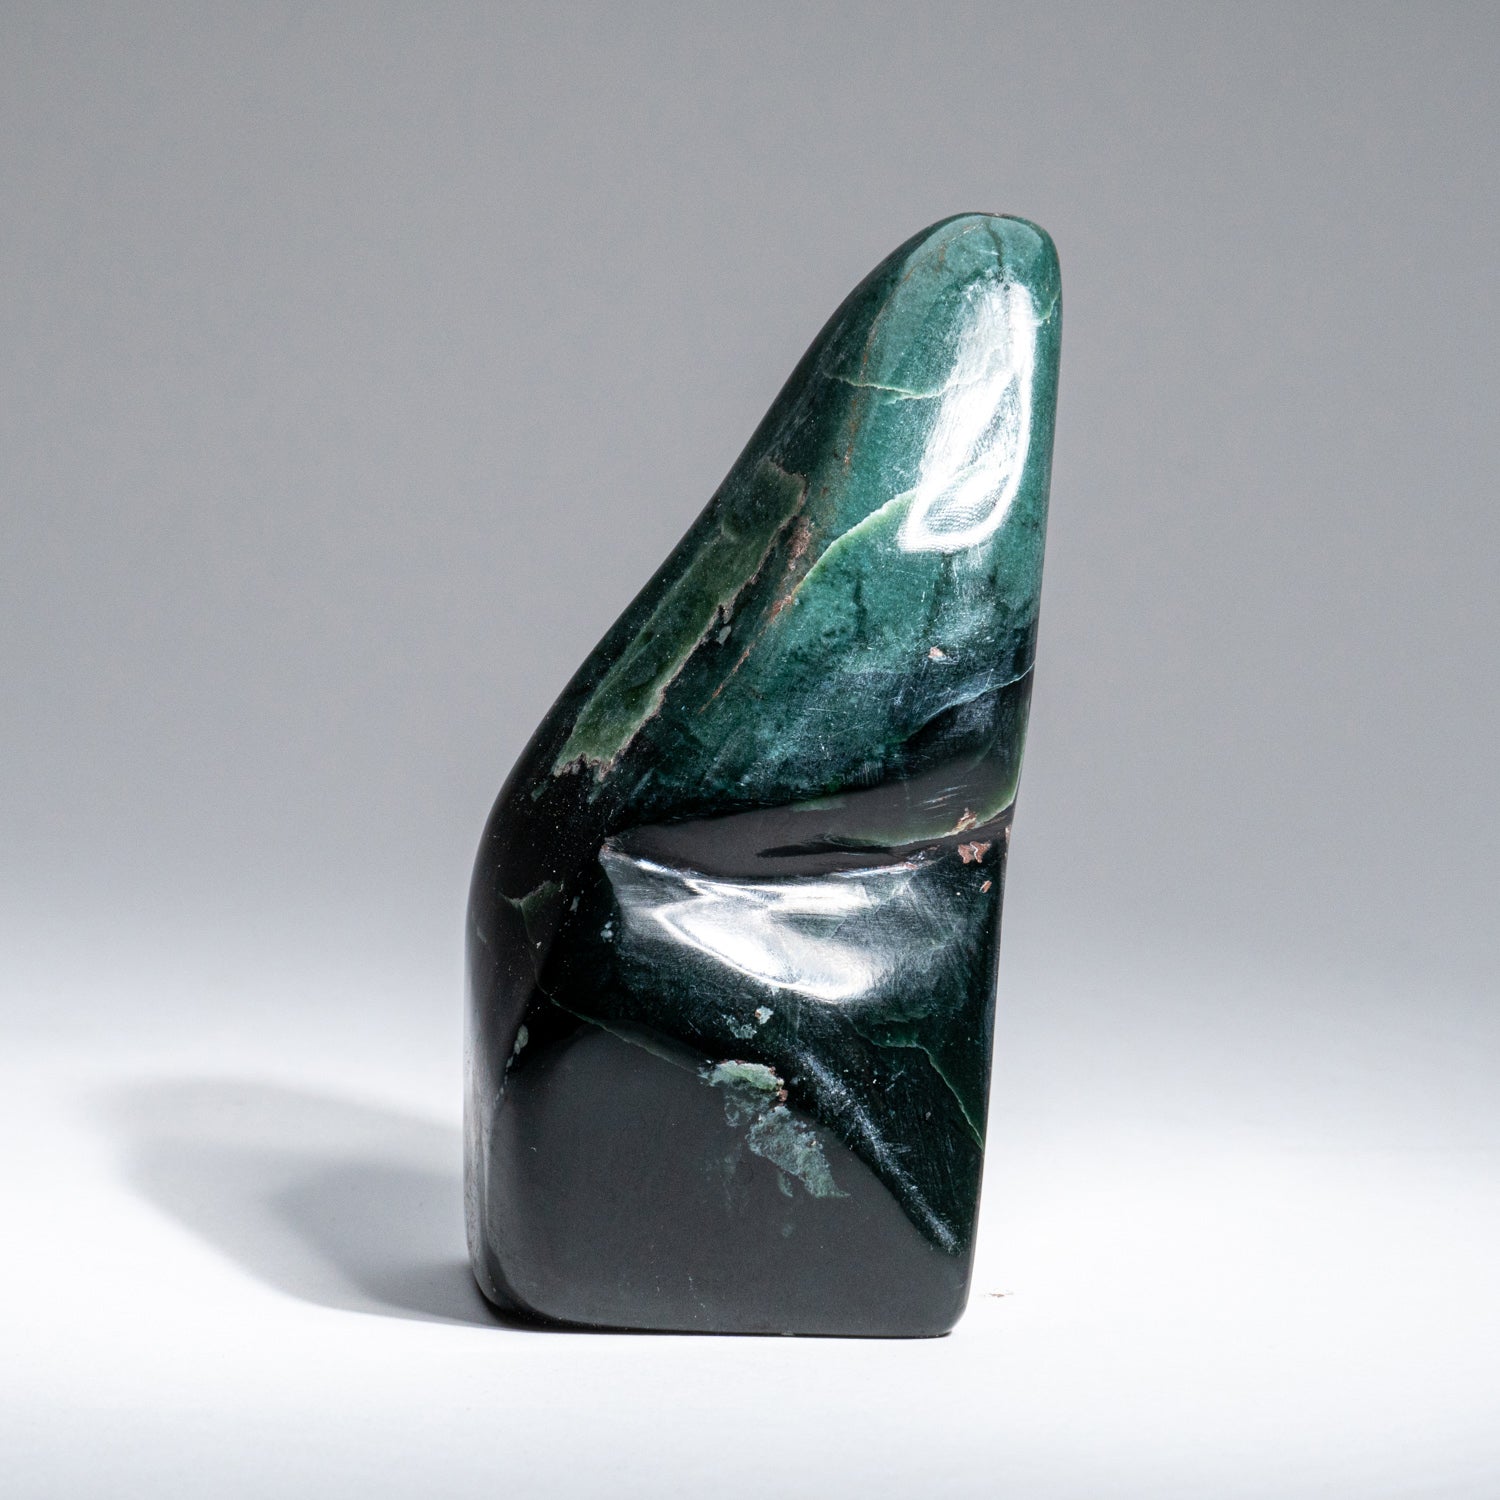 Polished Nephrite Jade Freeform from Pakistan (393.5 grams)